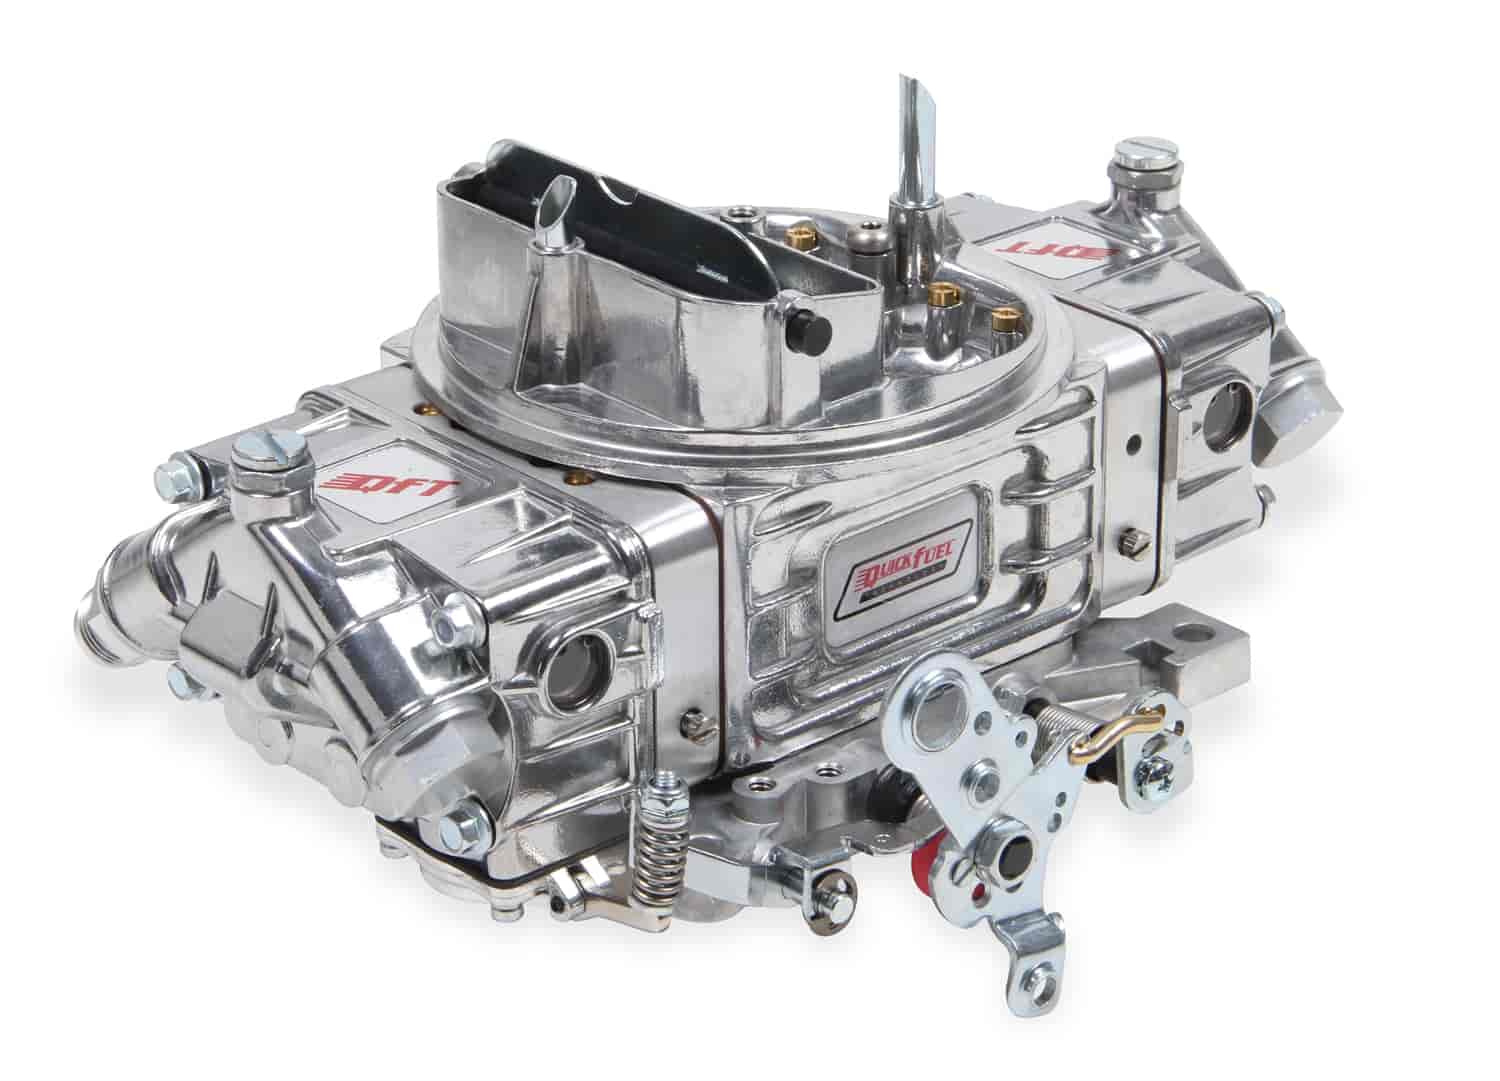 850 CFM 4-bbl SSR Carburetor For Auto w/Footbrake at Above 3000 ft. Mechanical Secondary